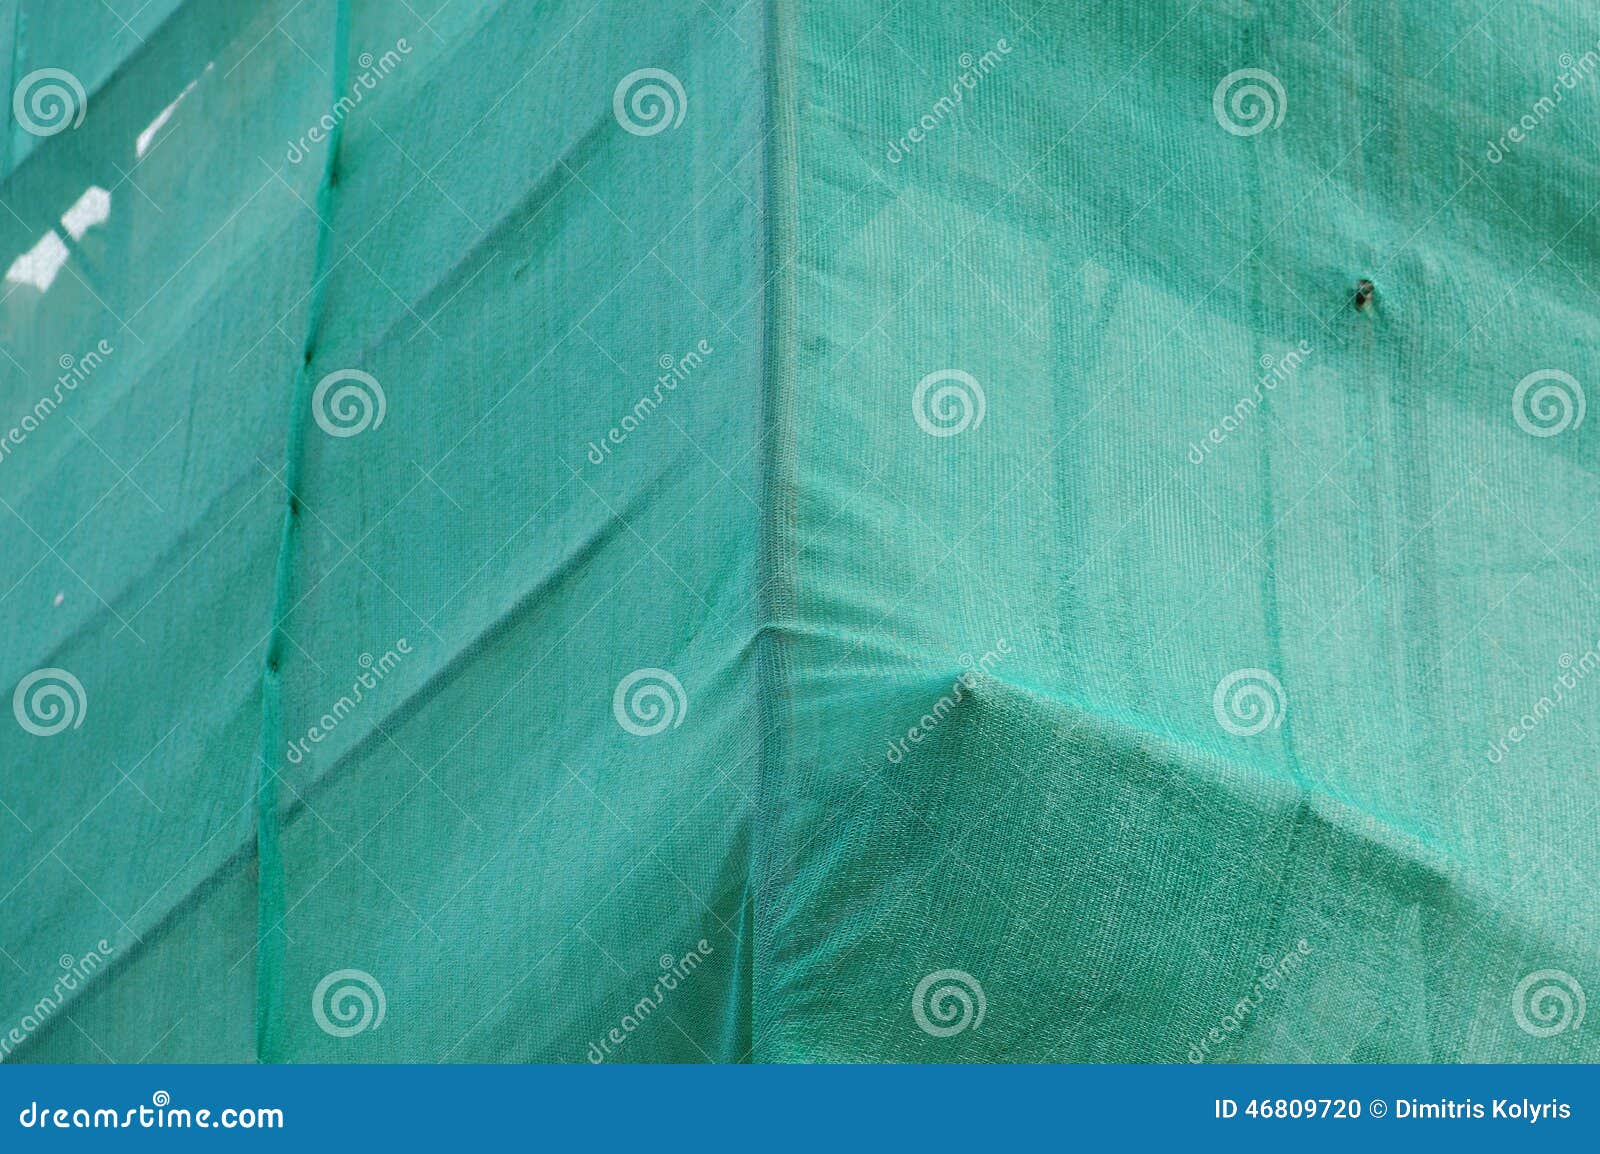 green debris netting